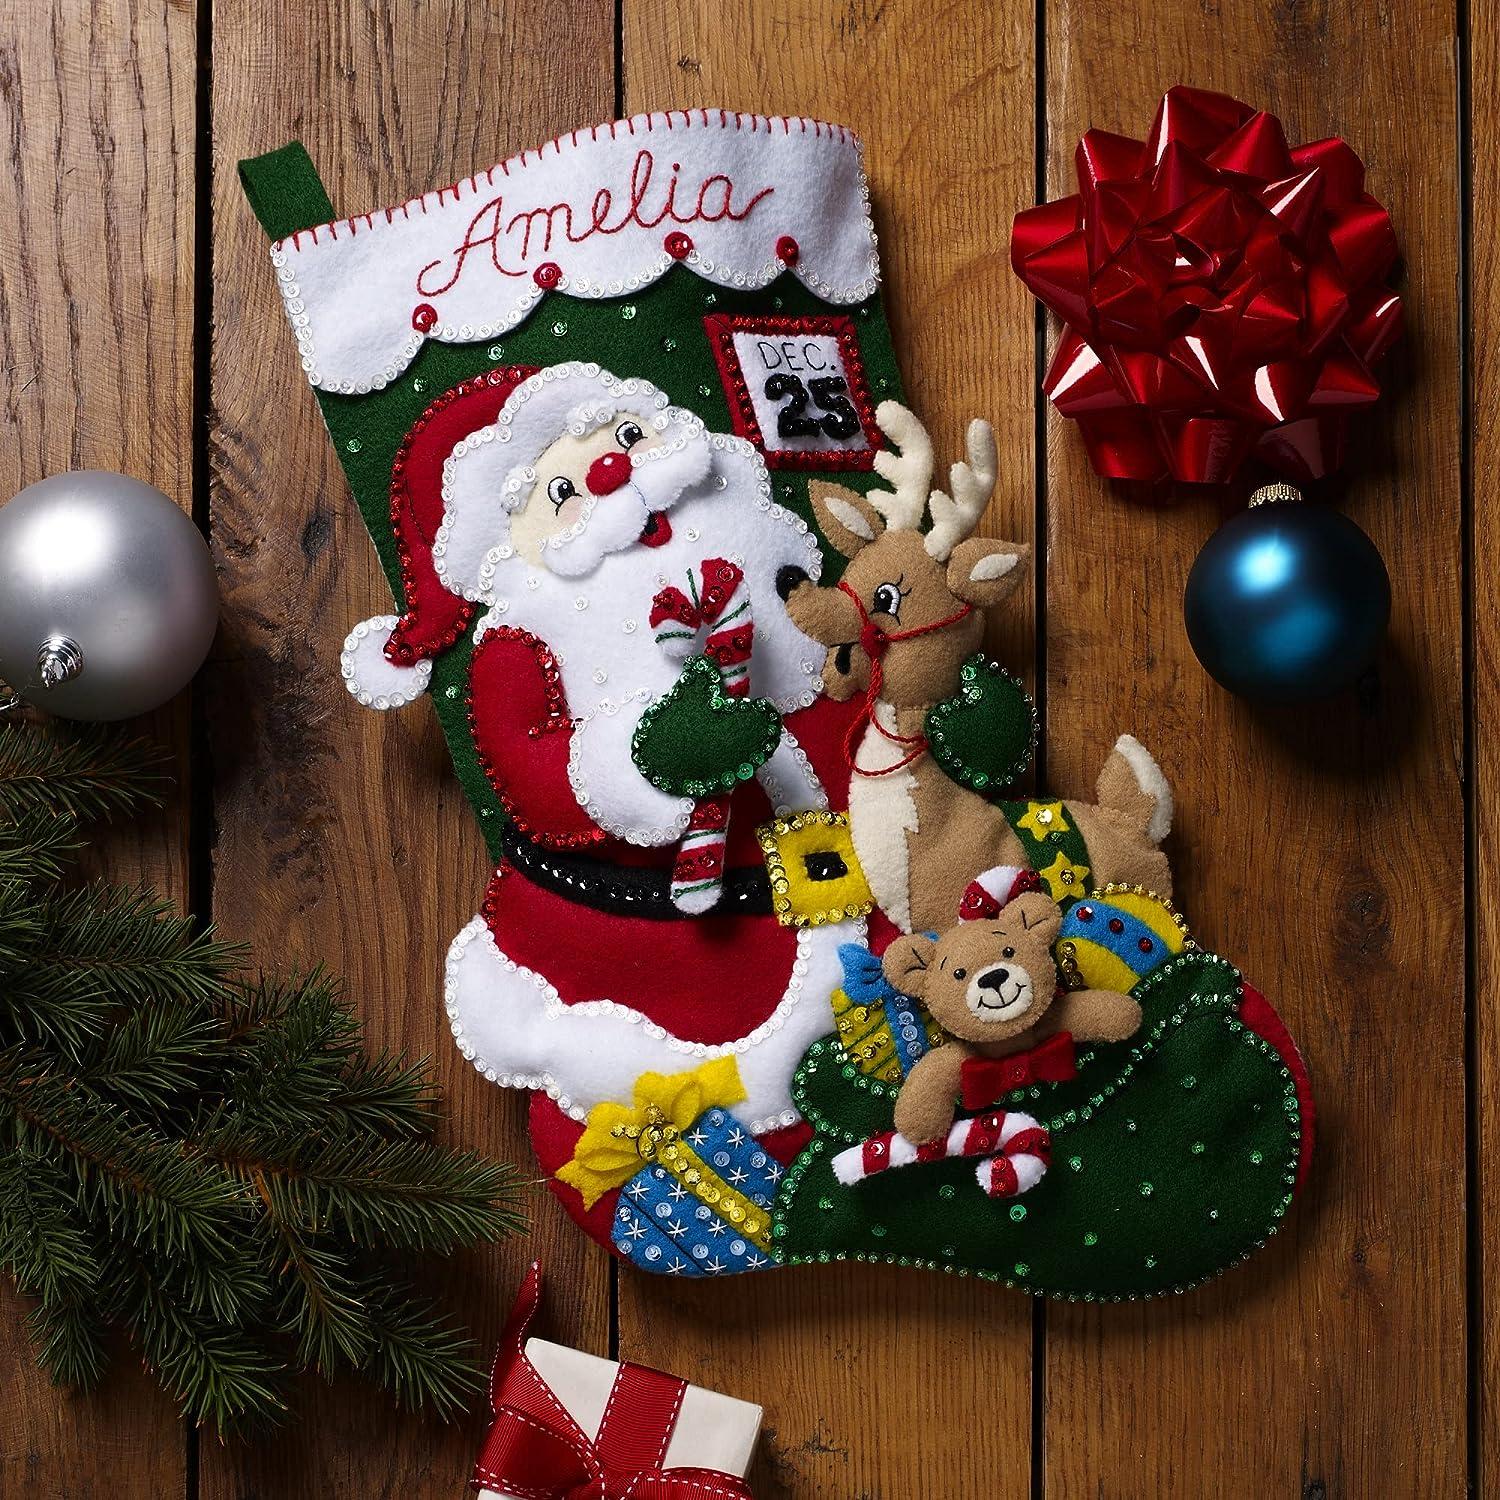 Bucilla Felt Applique Stocking Kit - Night Before Christmas